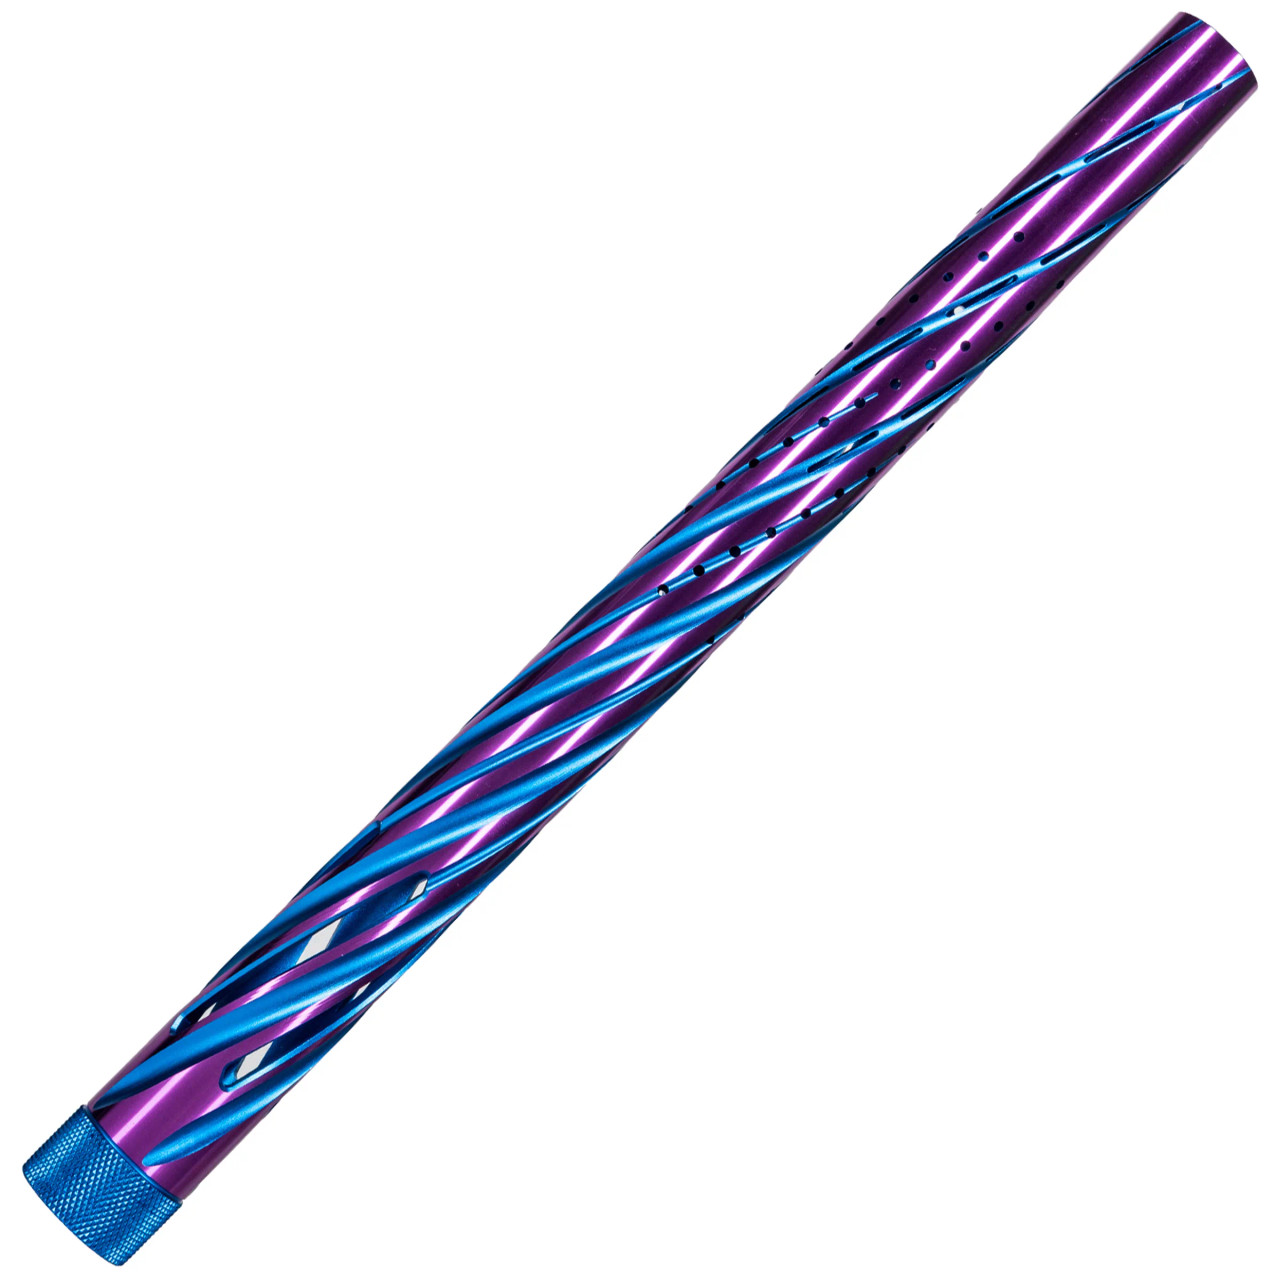 HK - LAZR Tip - Orbit - Dust Blue/Purple